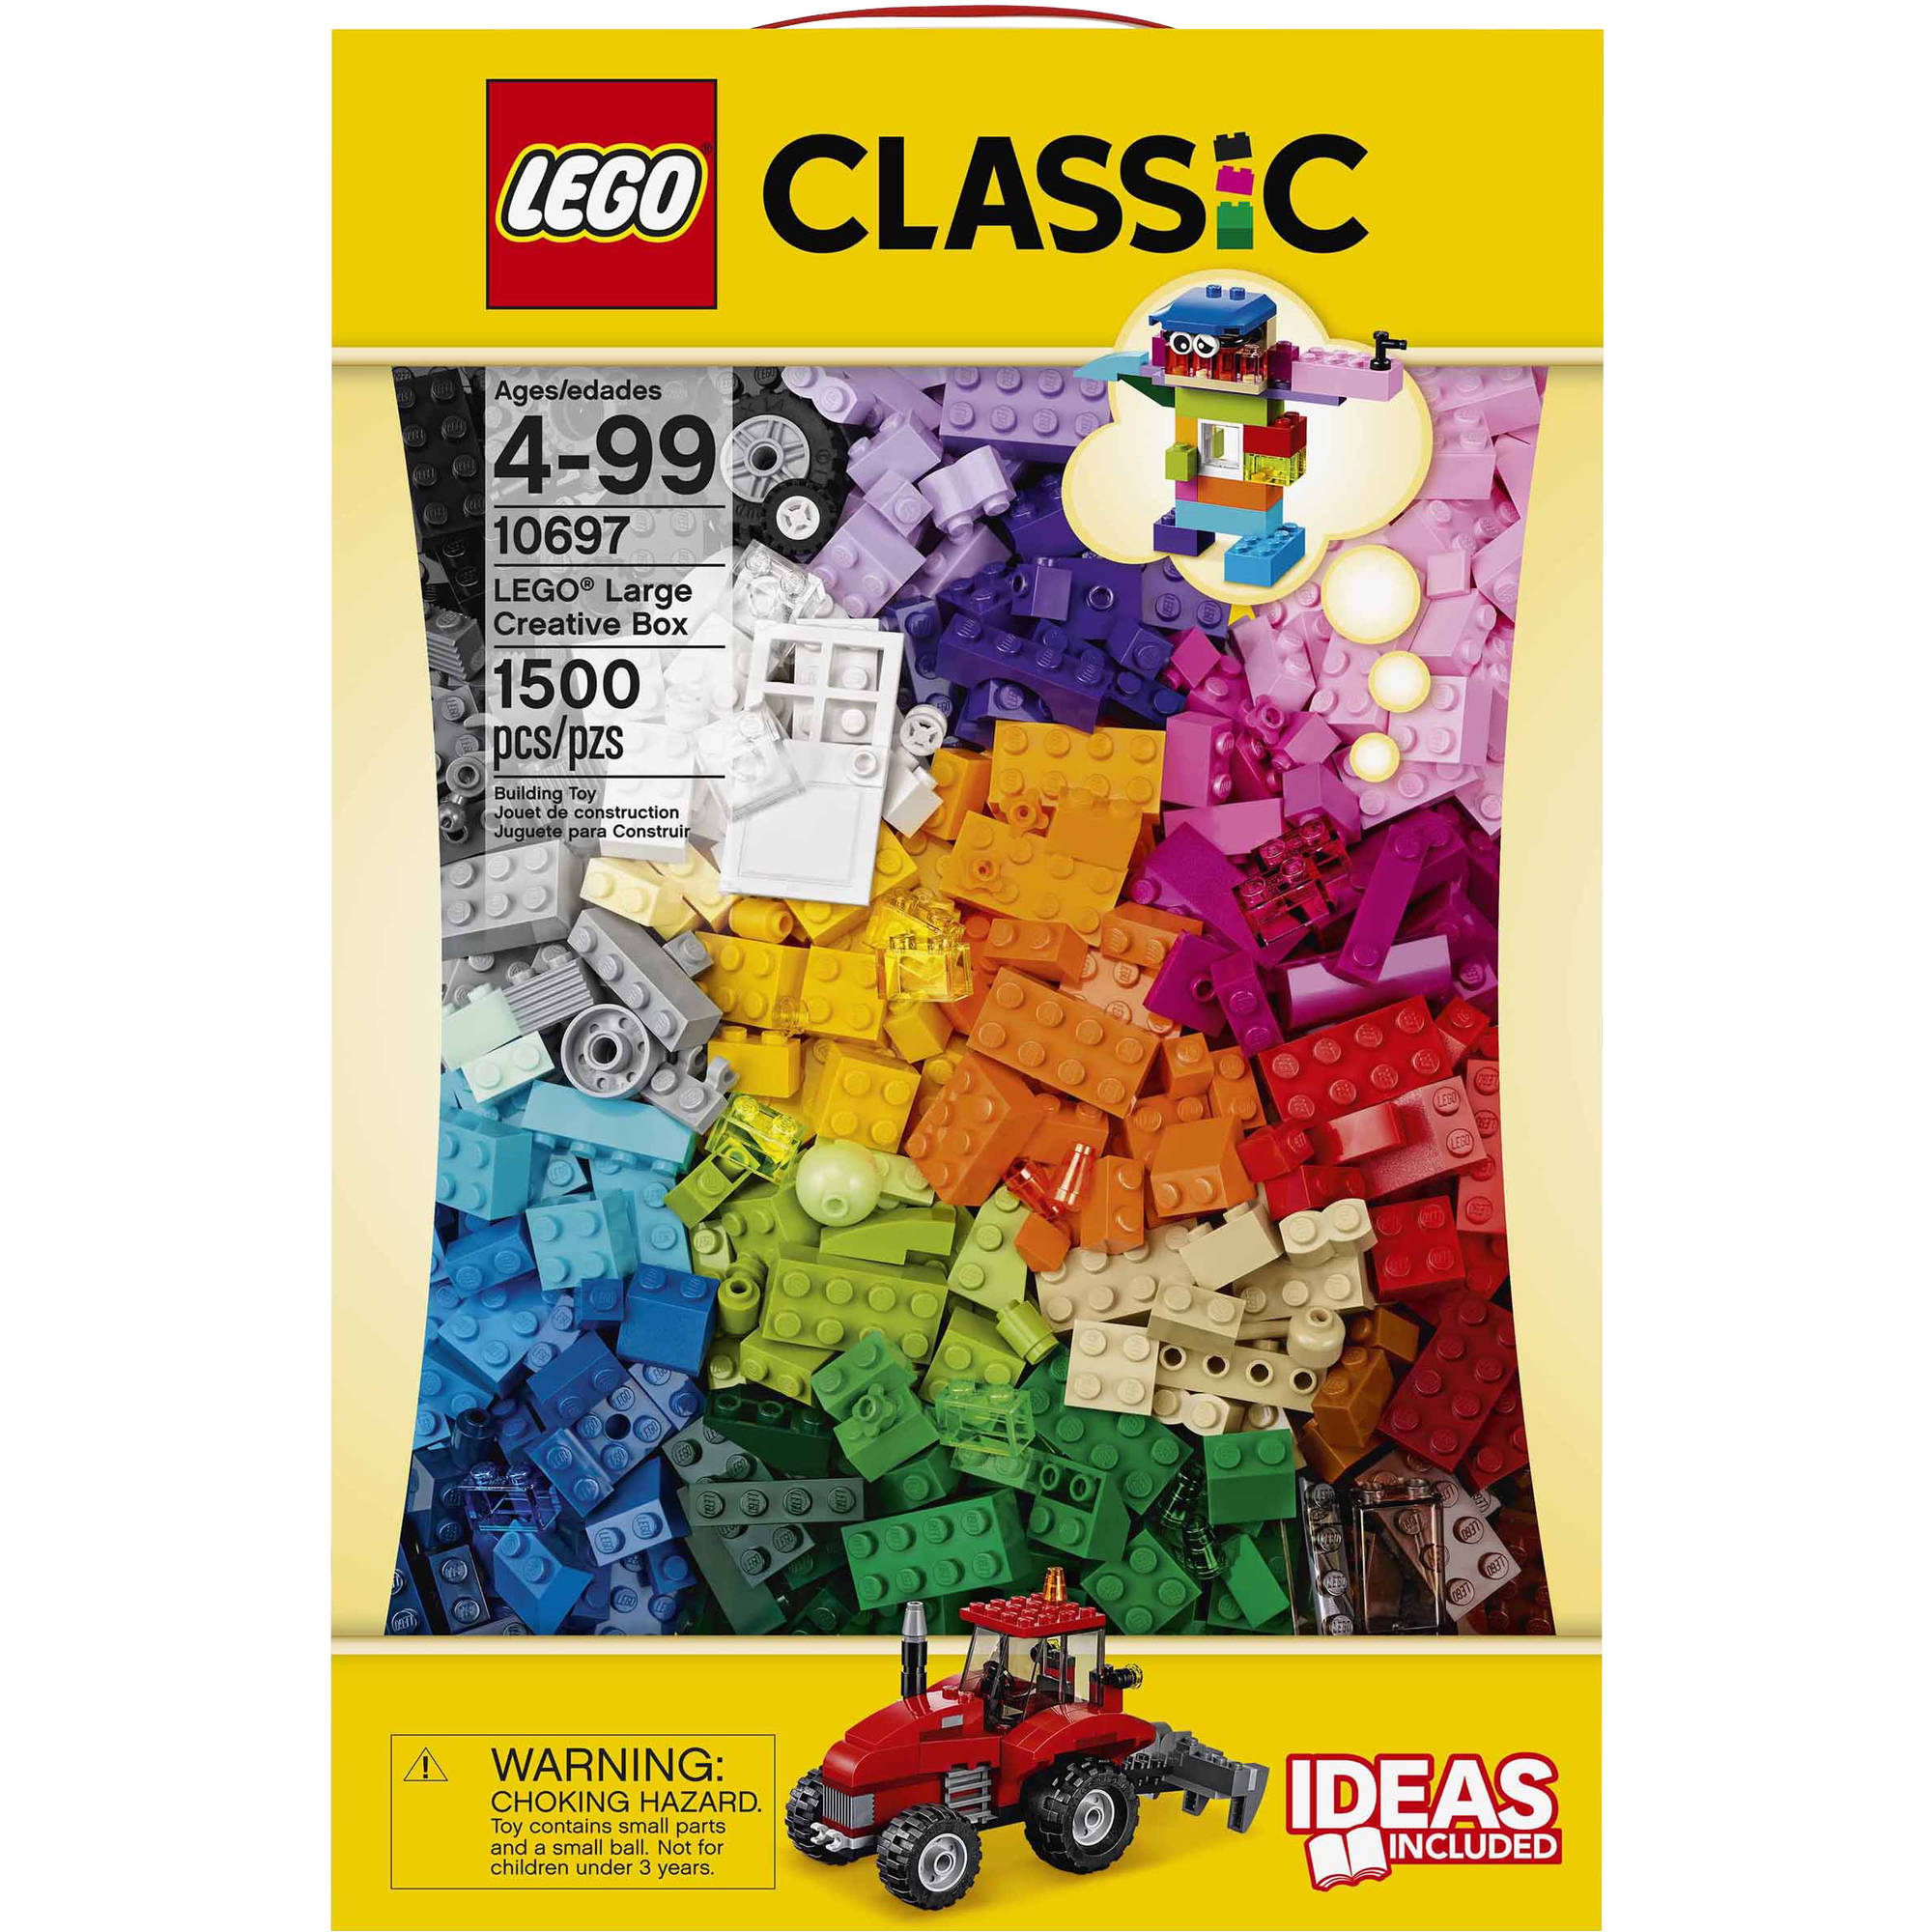 LEGO Classic Large Creative Box - image 2 of 4